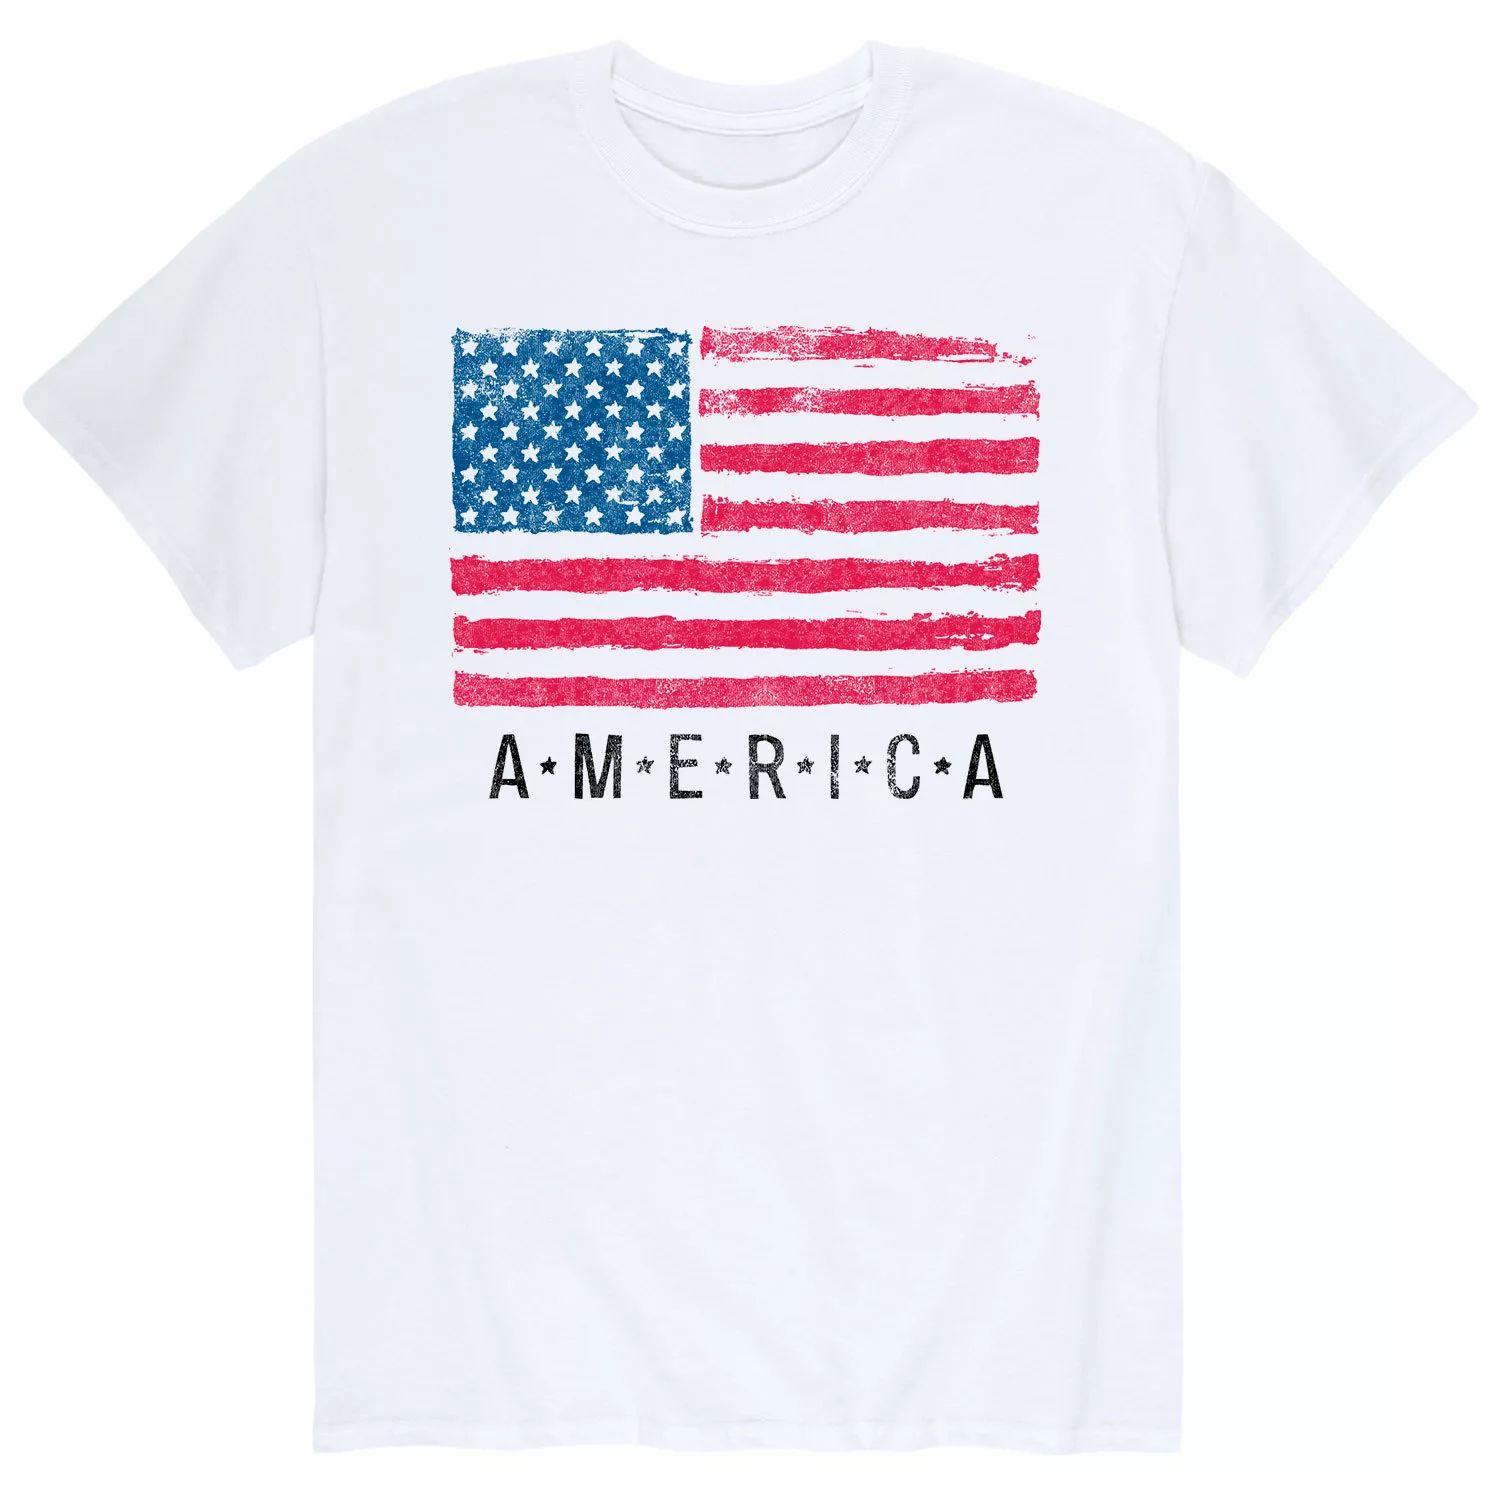 Мужская футболка с американским флагом Licensed Character